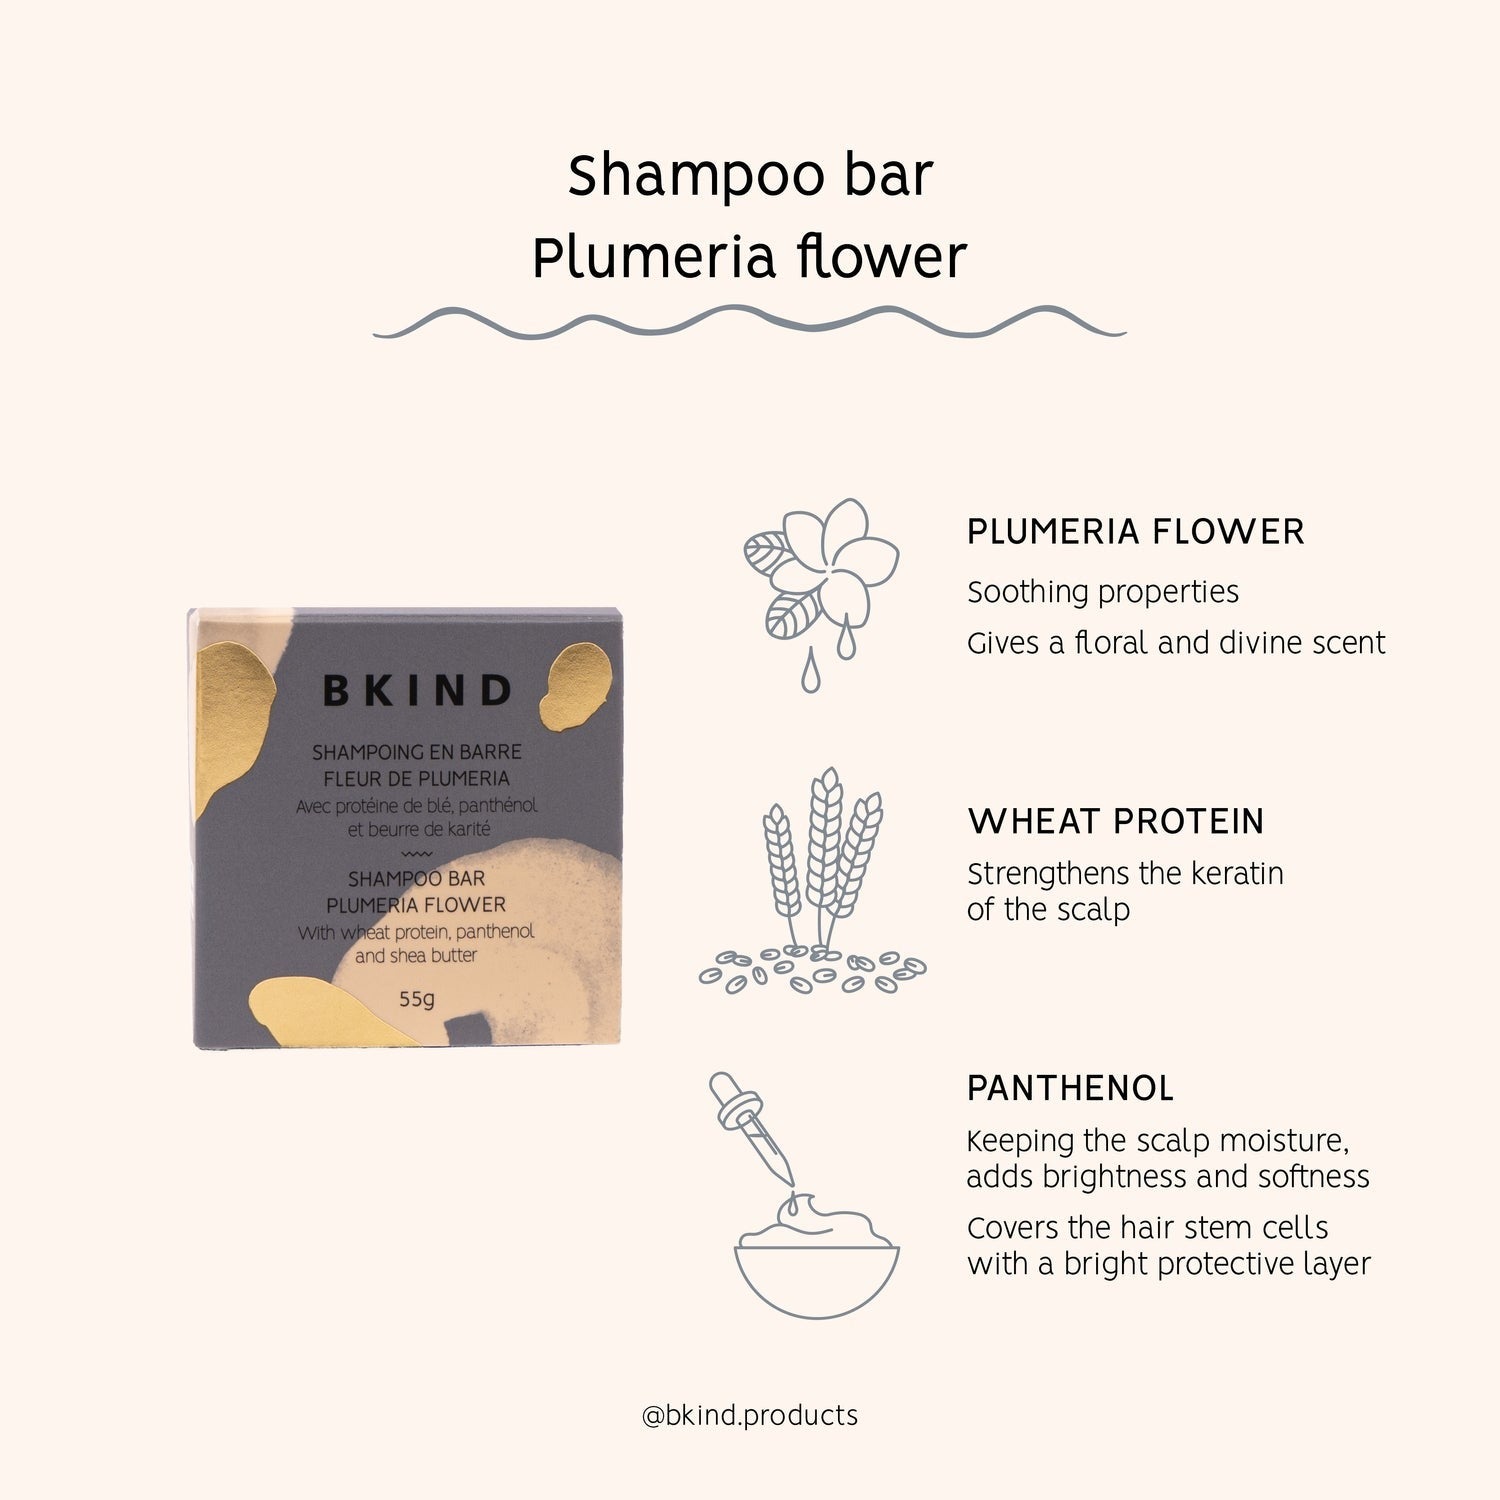 bkind shampoo bar plumeria flower